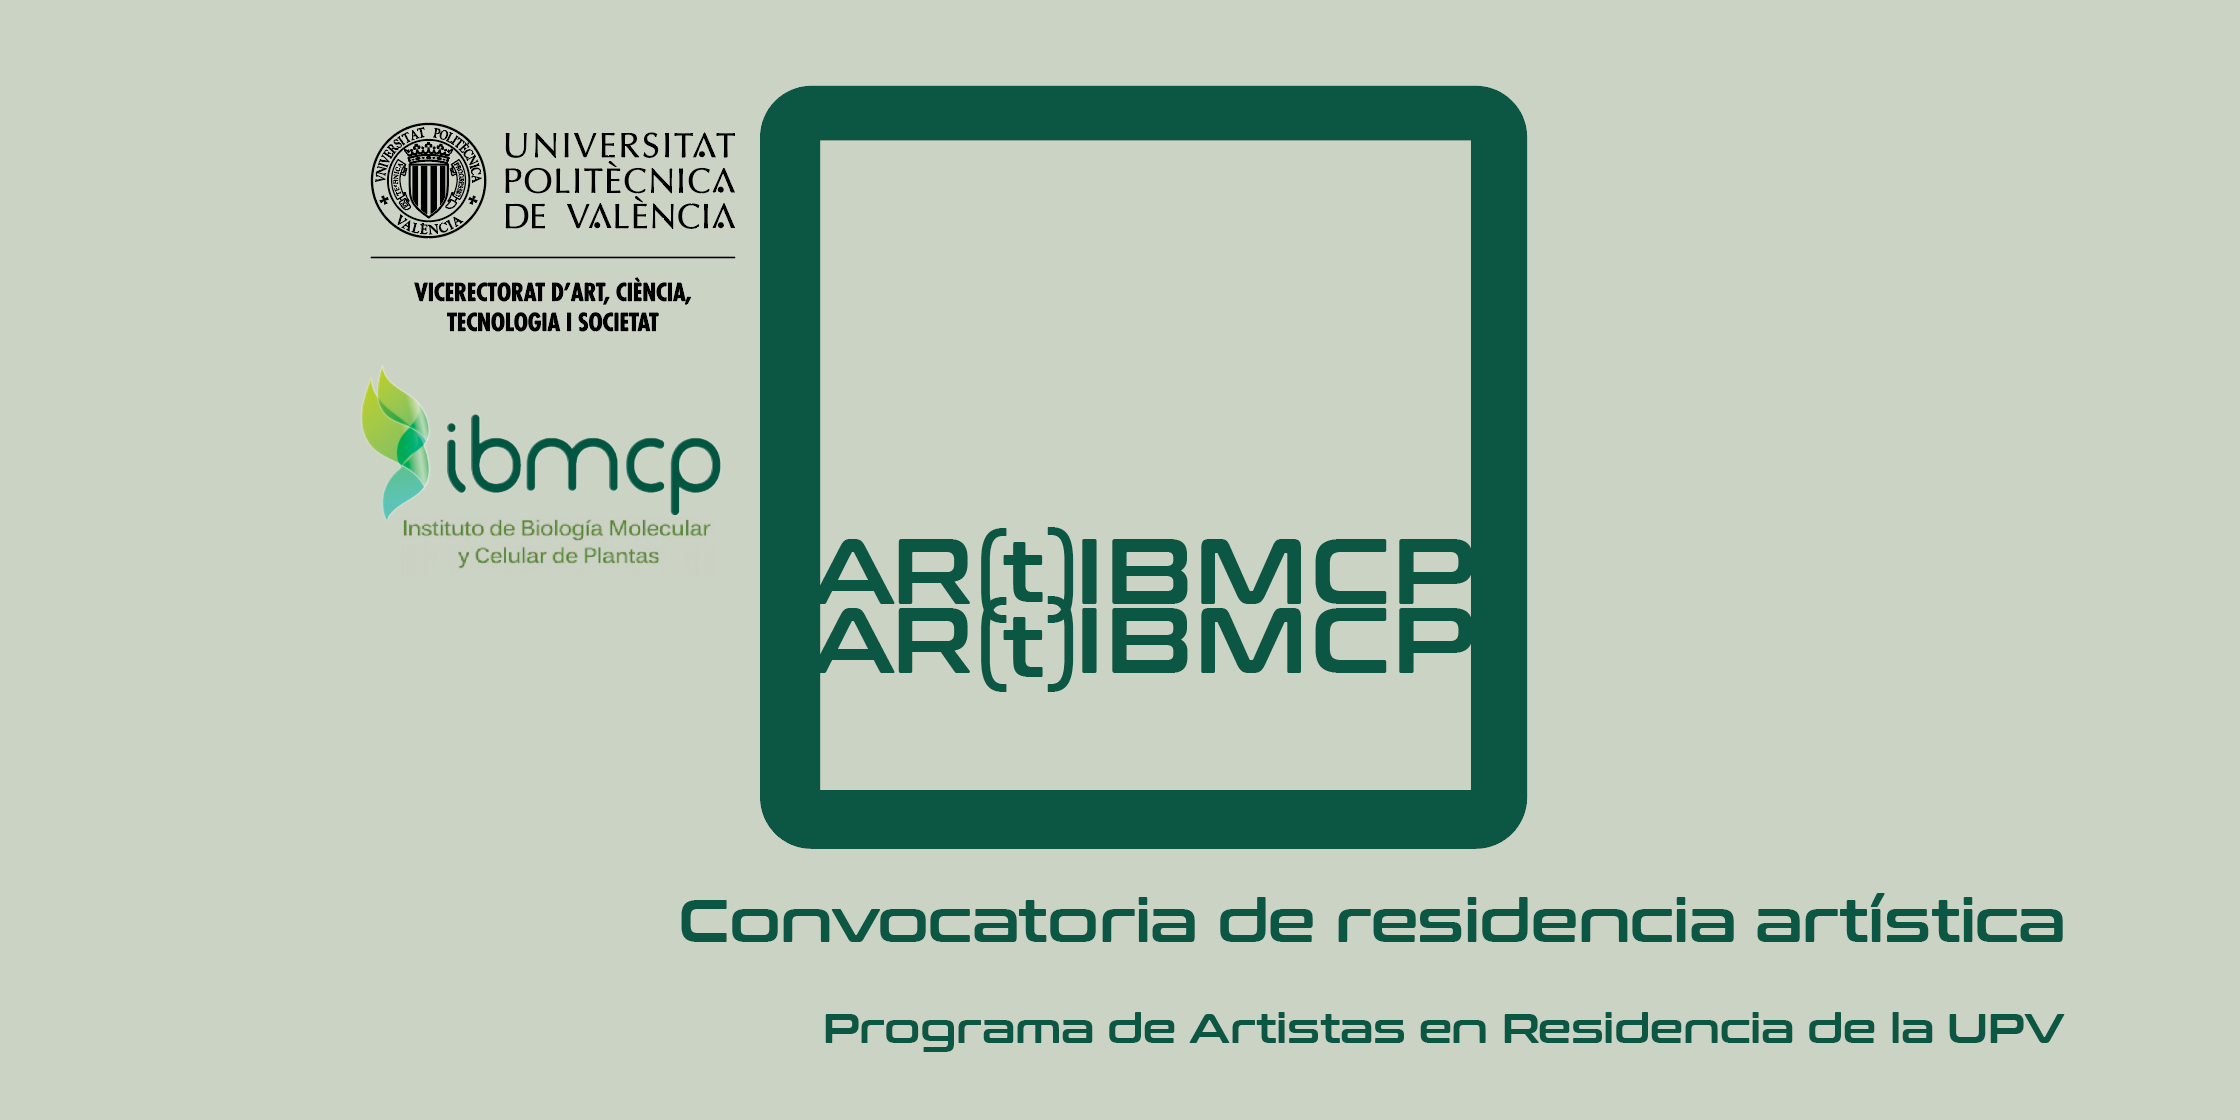 4. AR(t)IBMCP Residència Artistica